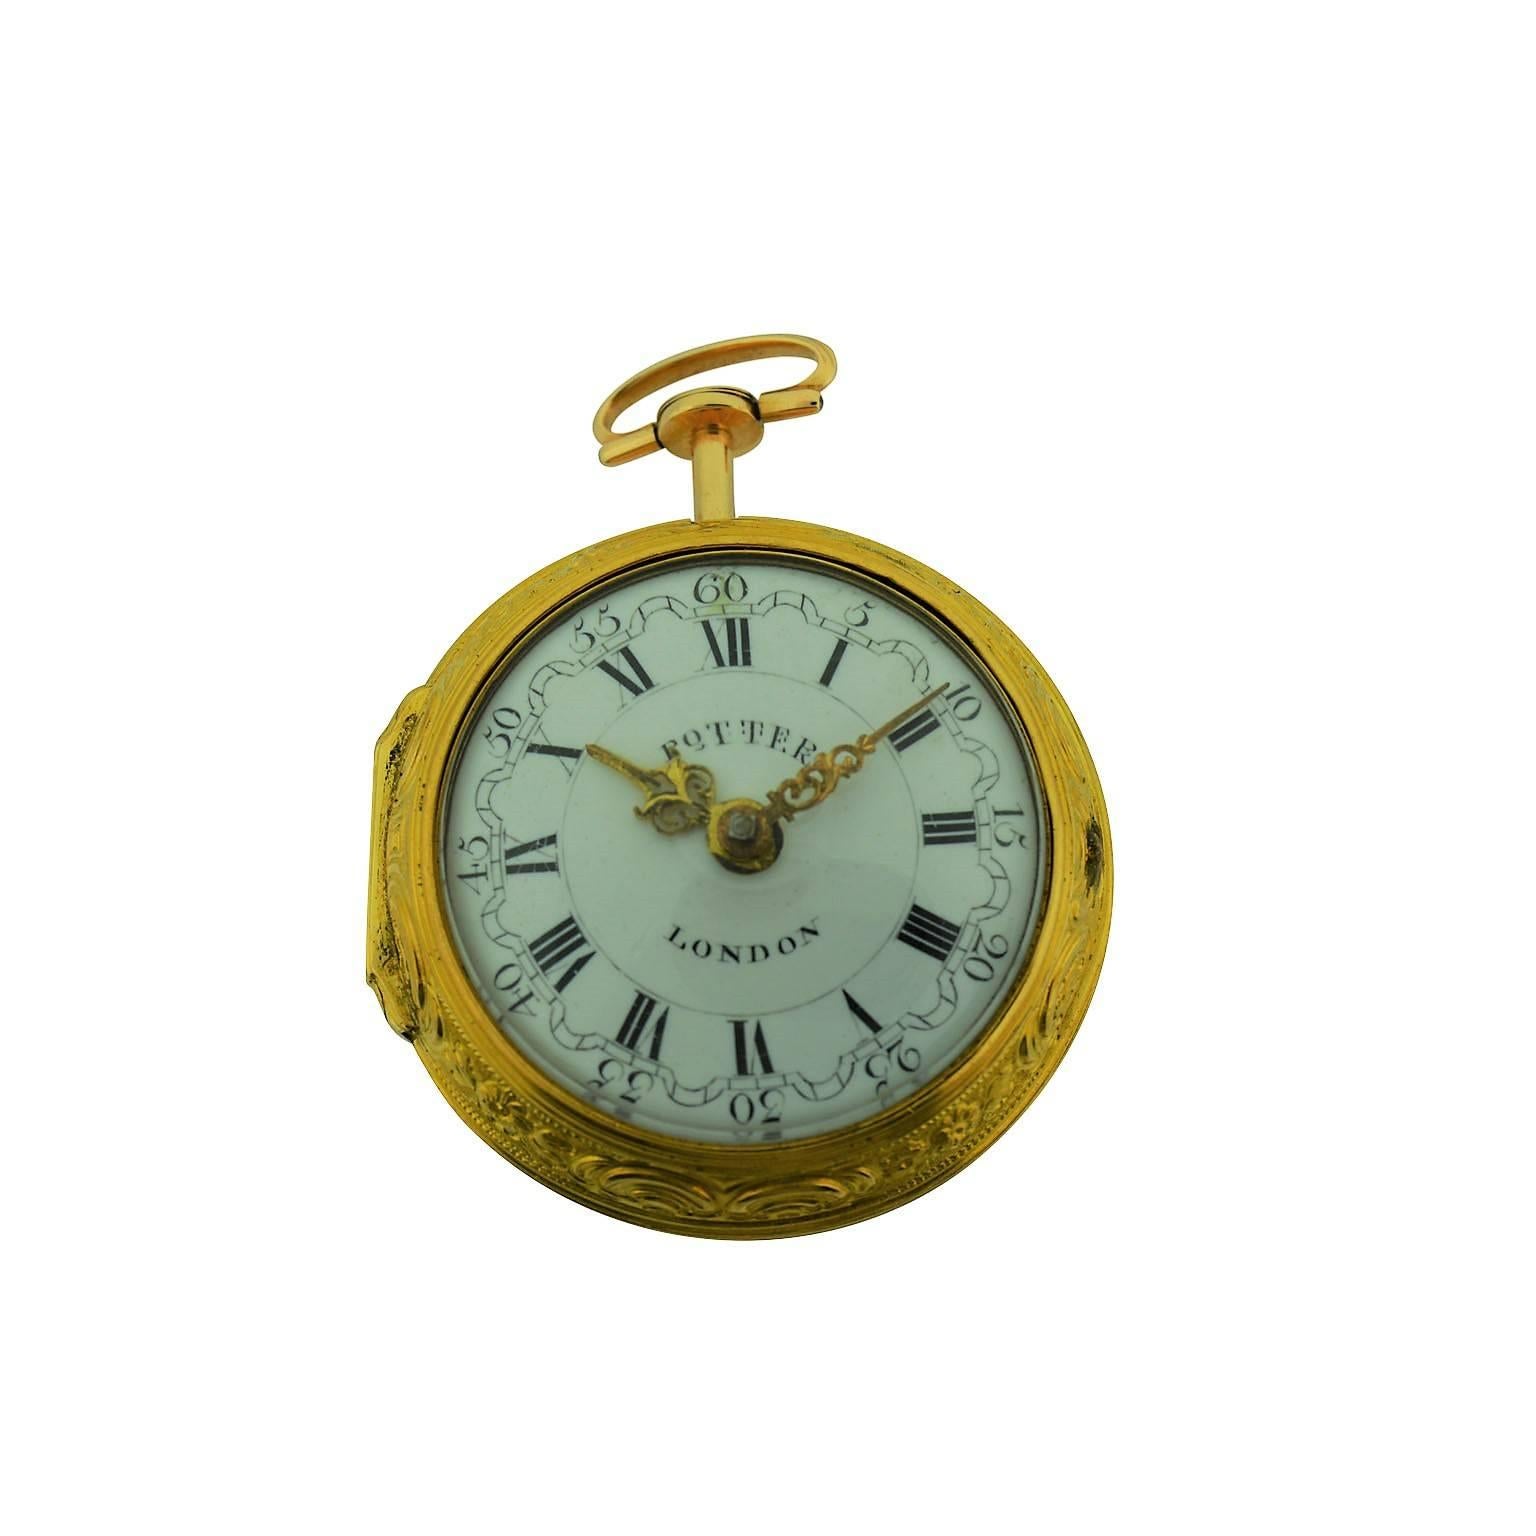 Harry Potter: Harry Potter's Uhr London 1791 Gold Repousse Verge Fusee für Damen oder Herren im Angebot